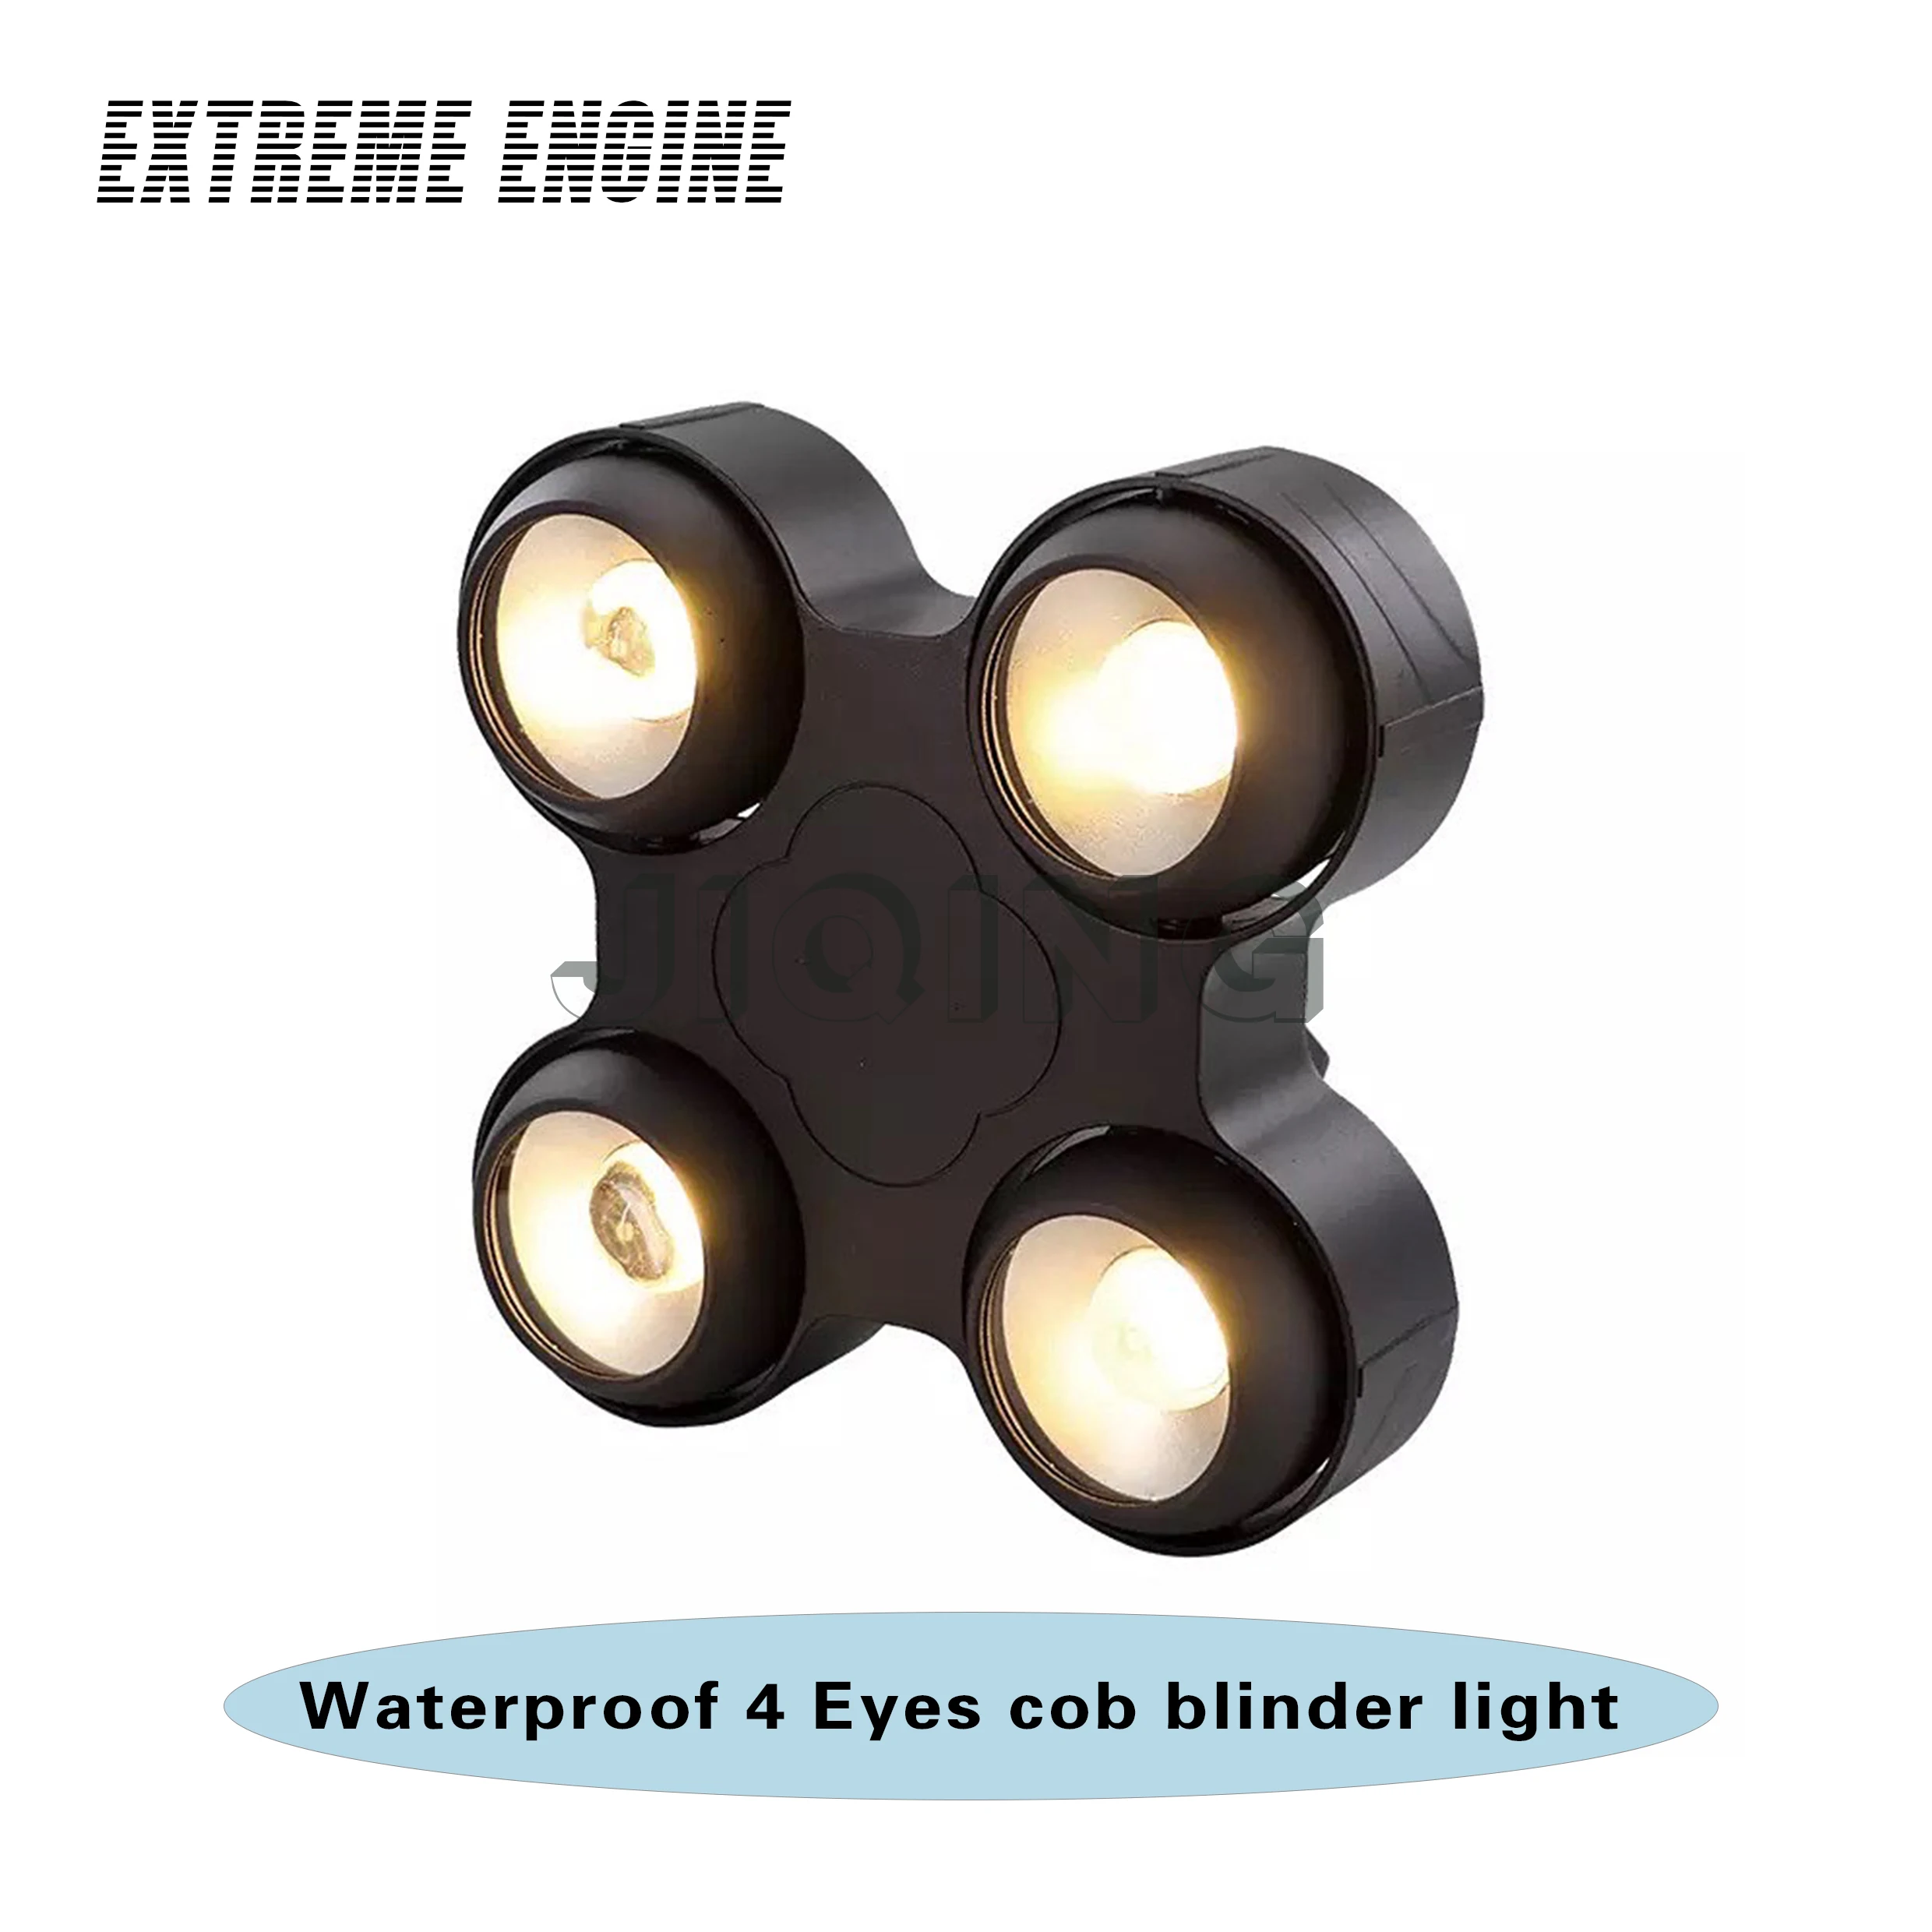 

4 Eye Waterproof COB Blinder Lights with Flight case option 400W Four Eye 4x100W COB Led Audience Light DMX Stage Light Twocolor